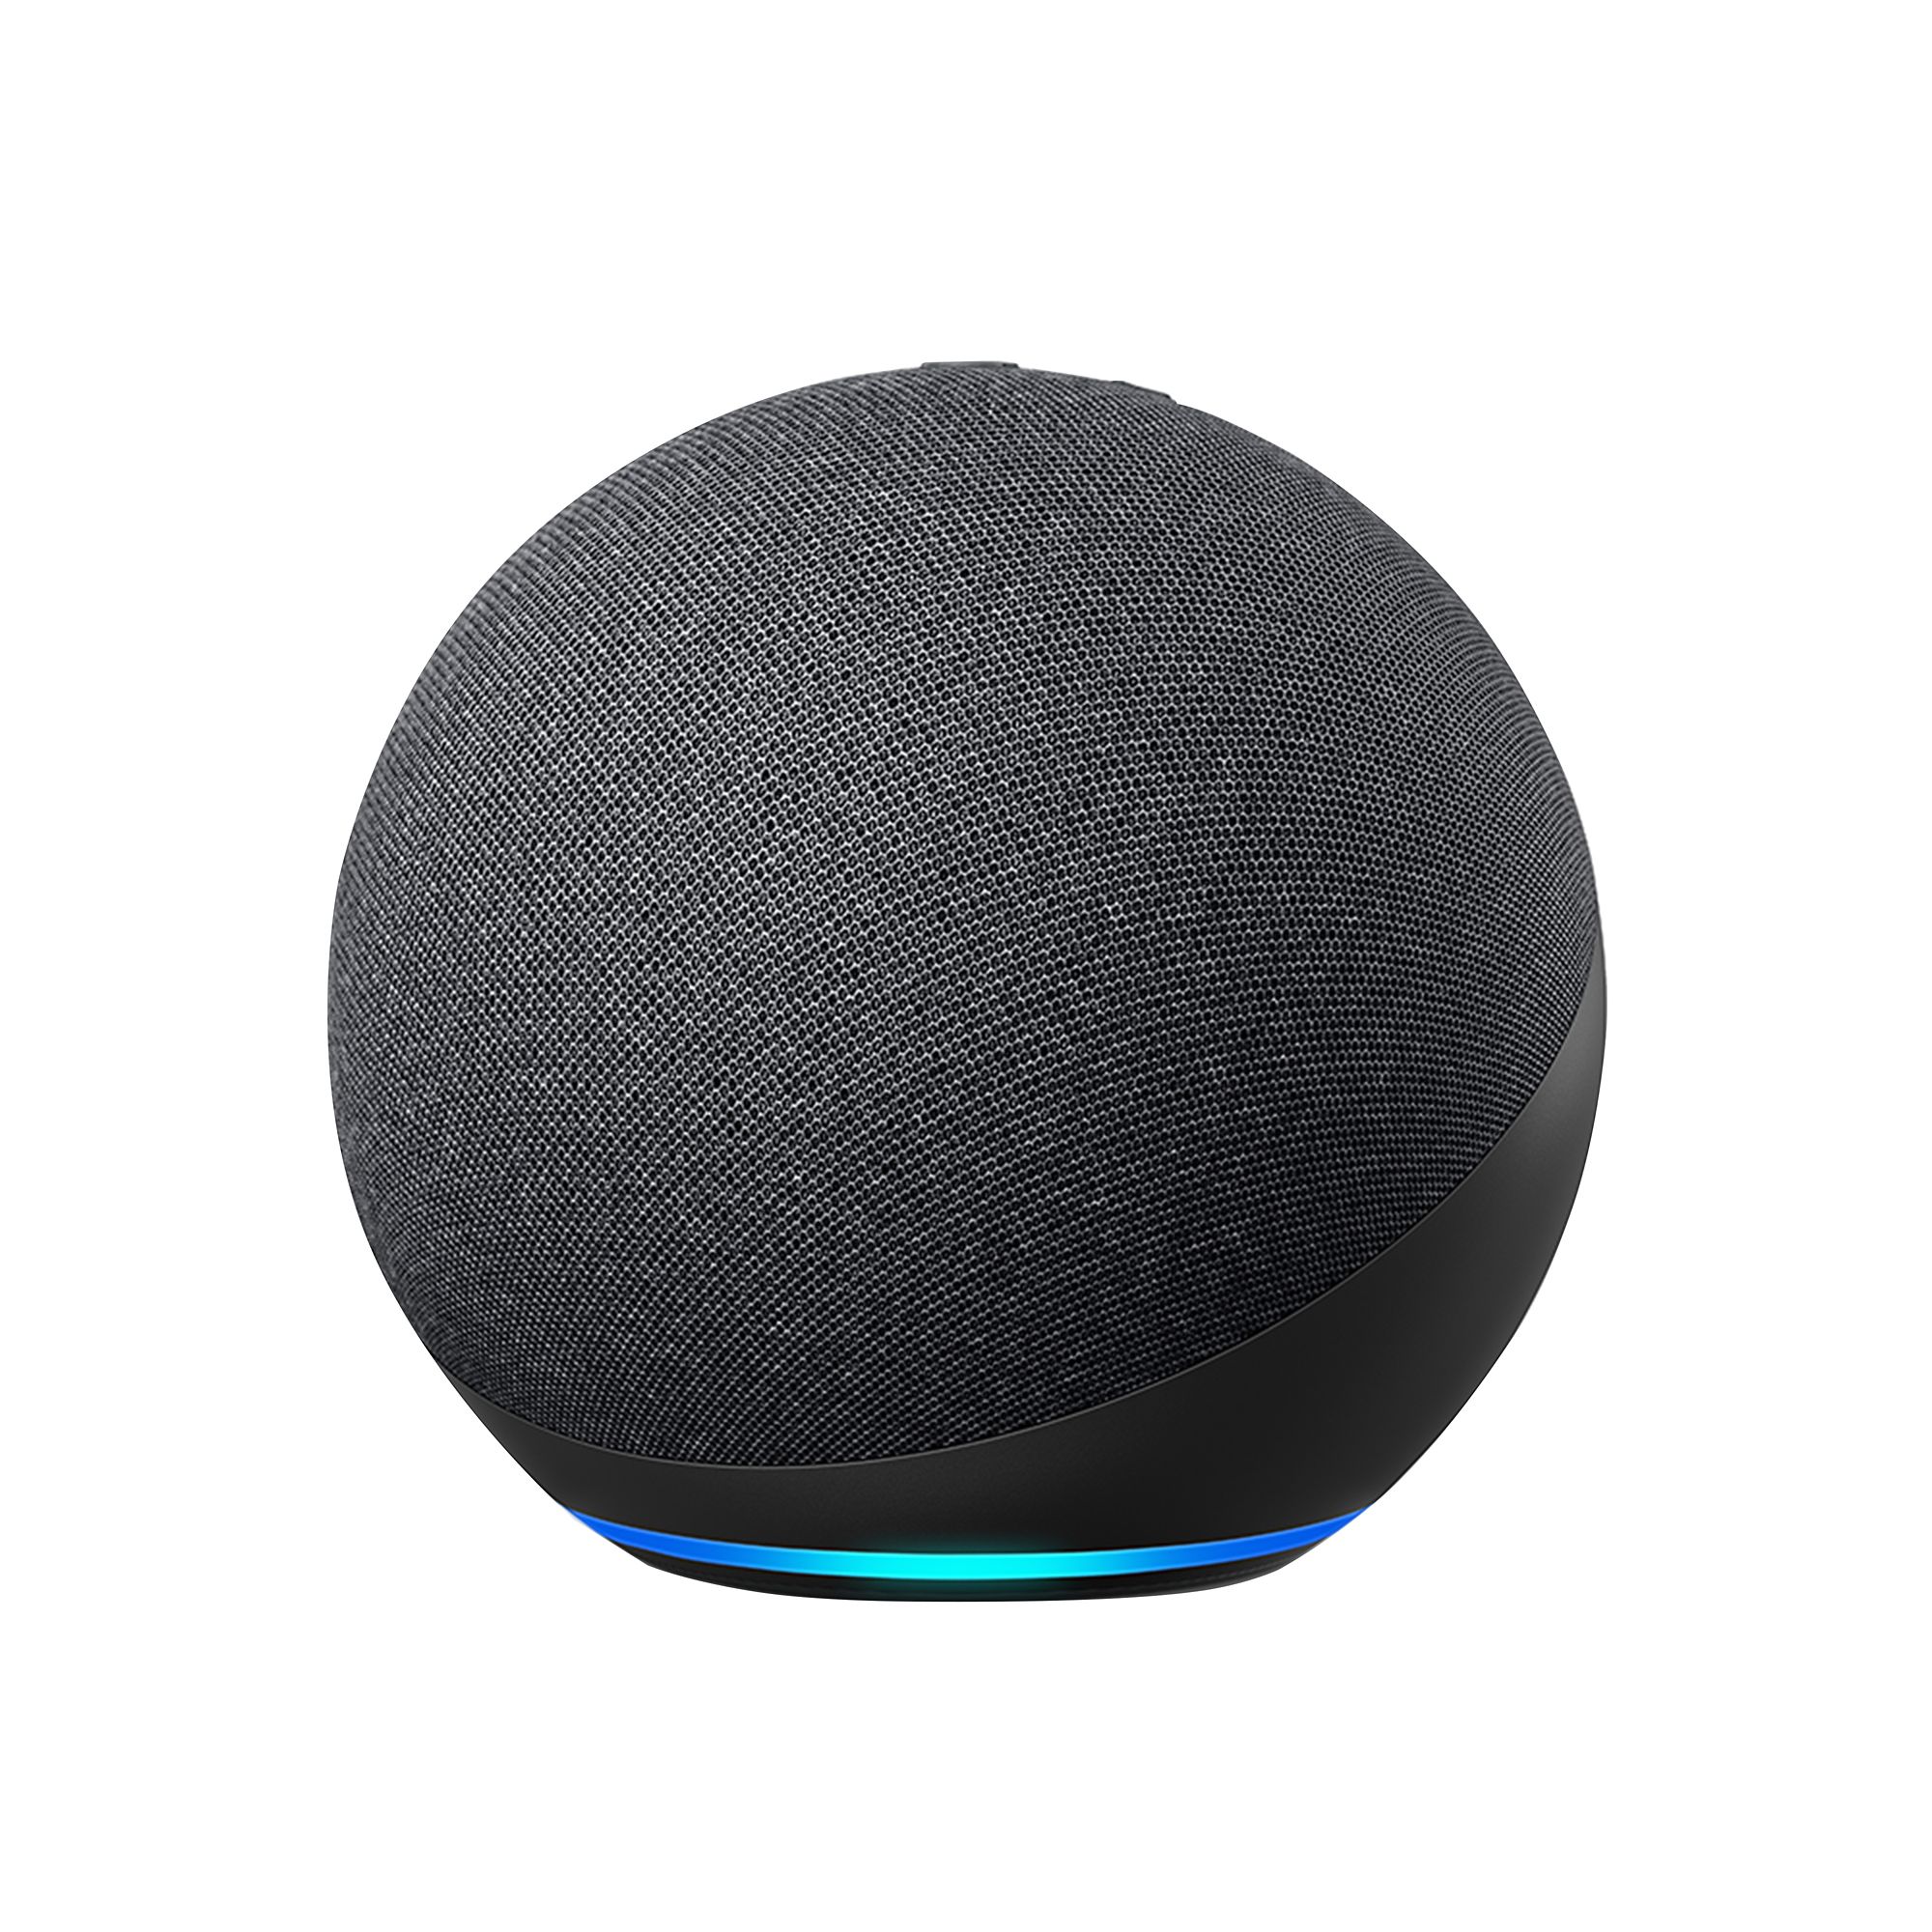 Best Echo Dot deal: Score the  Echo Dot for under $23